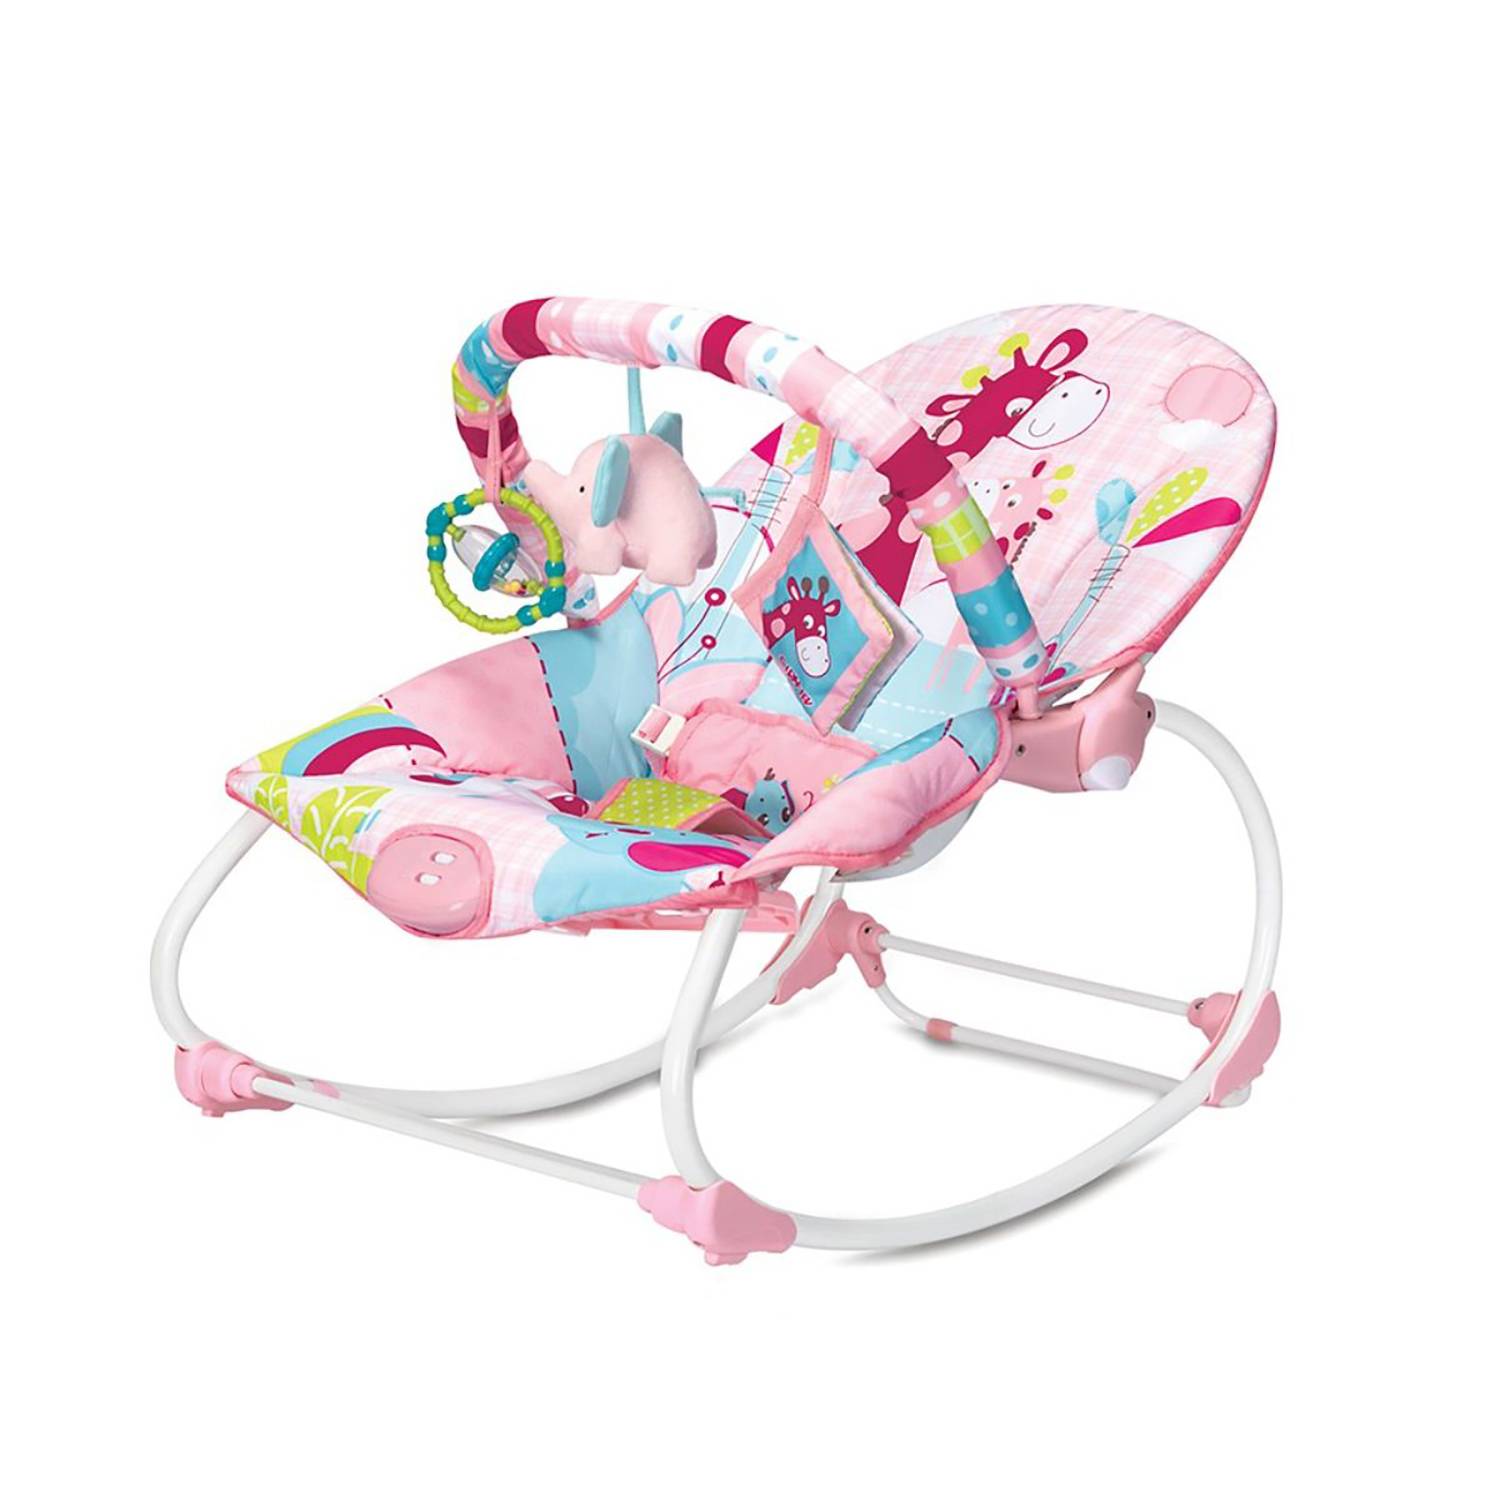 Silla Nido para Bebé Animalitos Safari Pink Infanti 6921